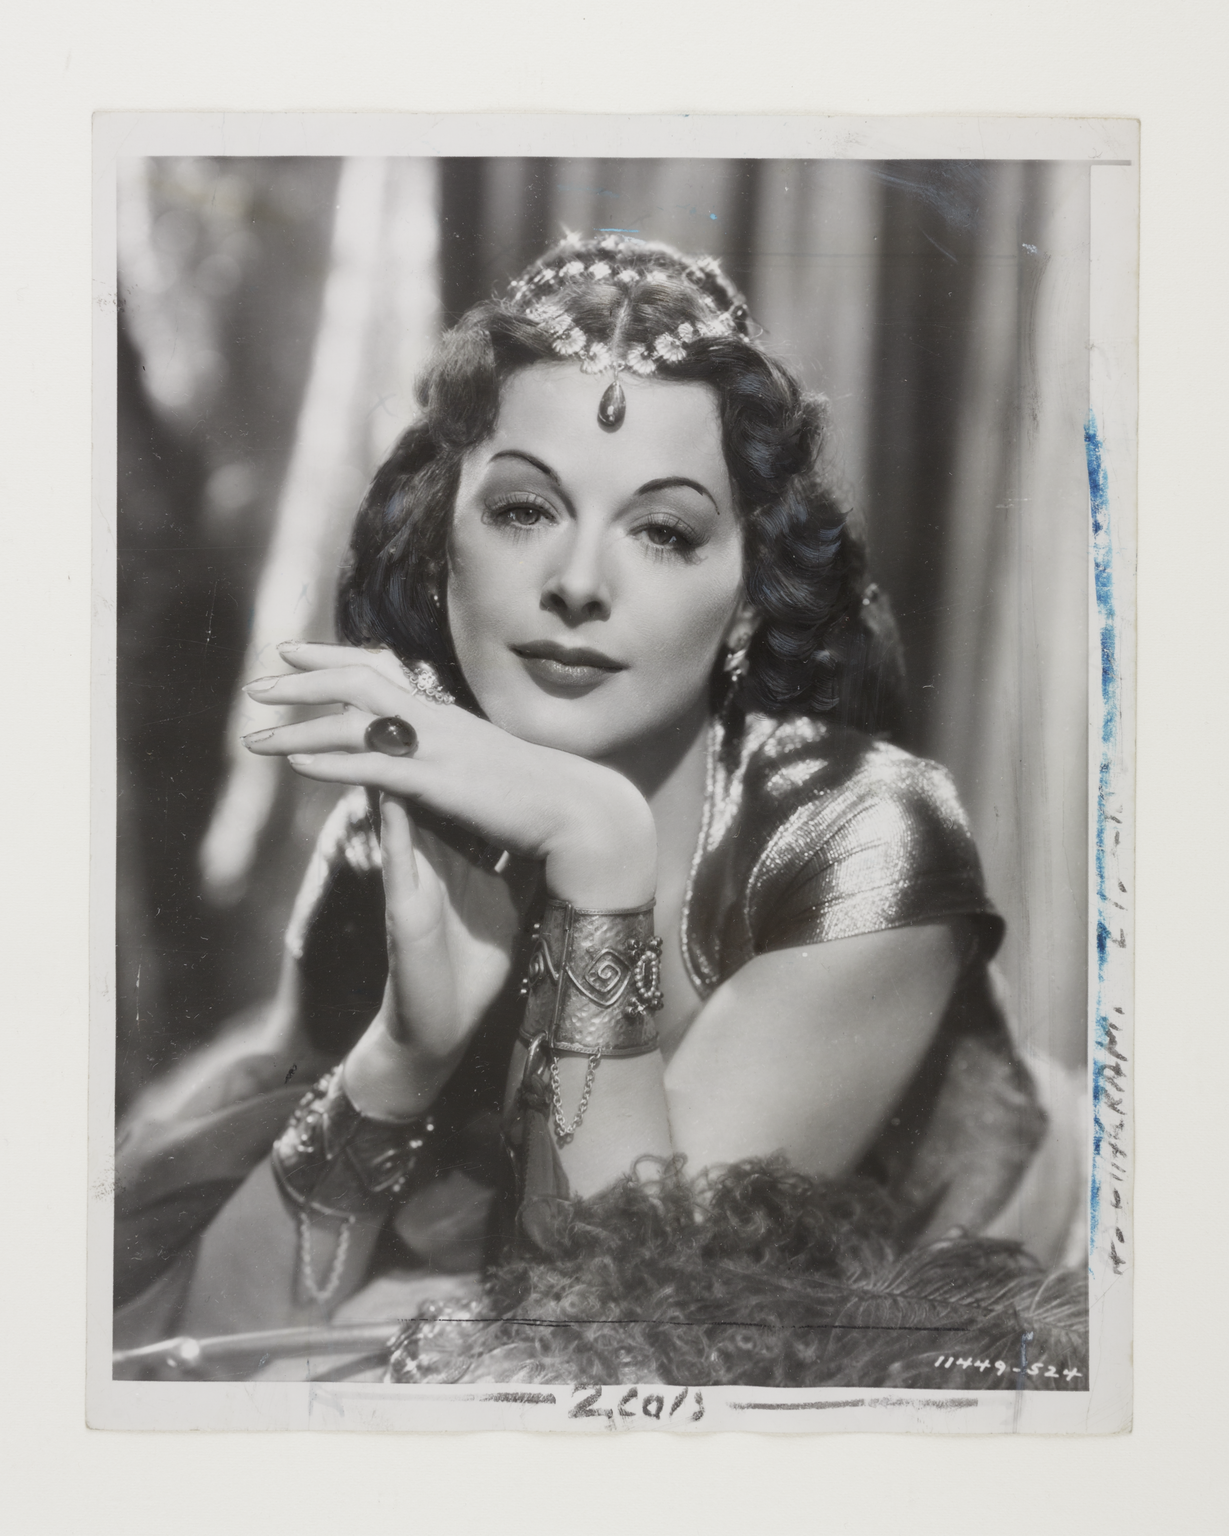 Hedy Lamarr in Samson and Delilah (1949). Publicity portrait.